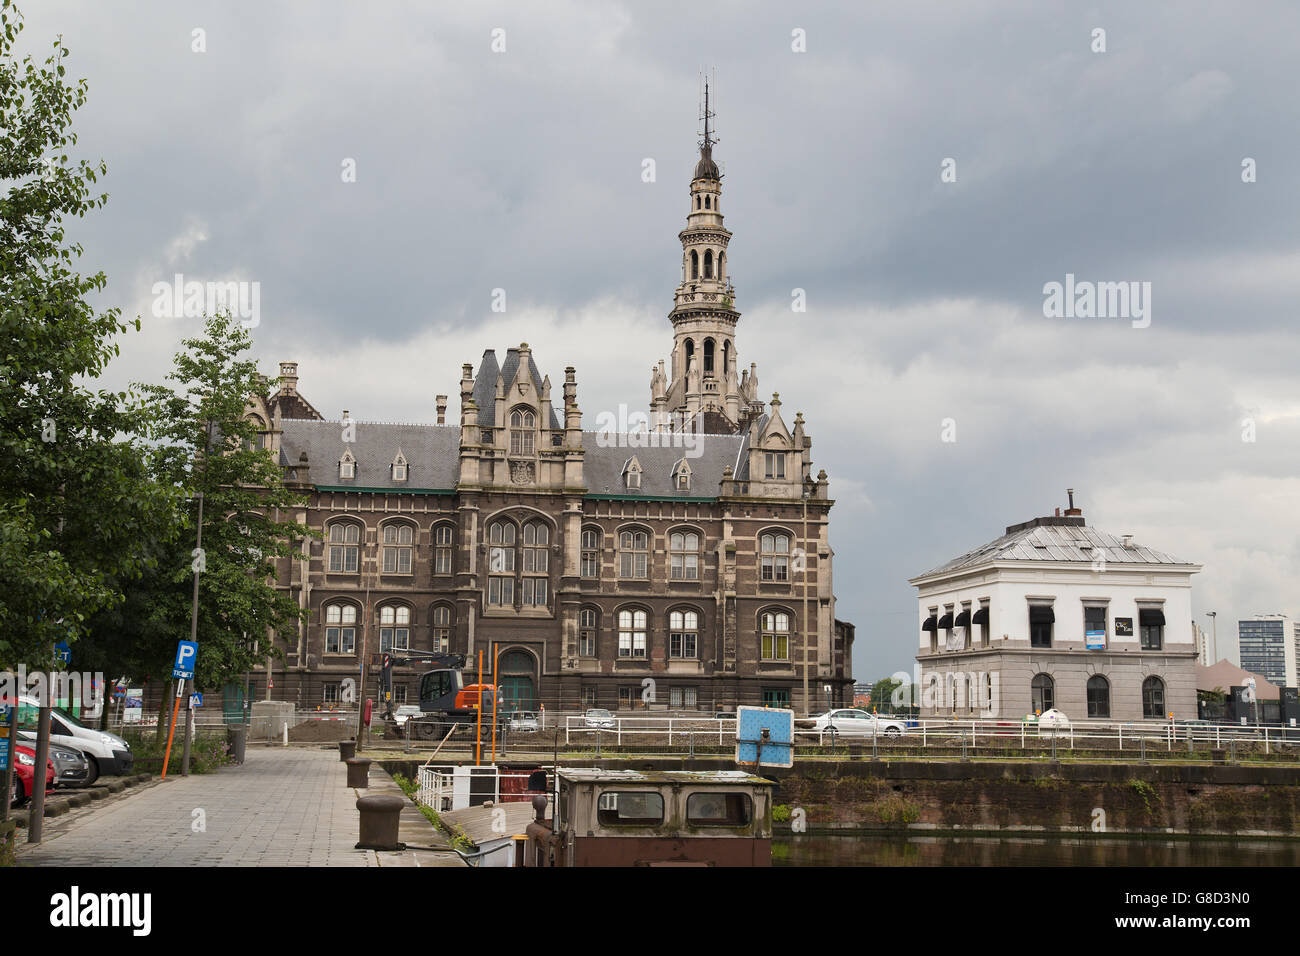 Pilotage Building in thhe port of Antwerp in Belgium Stock Photo